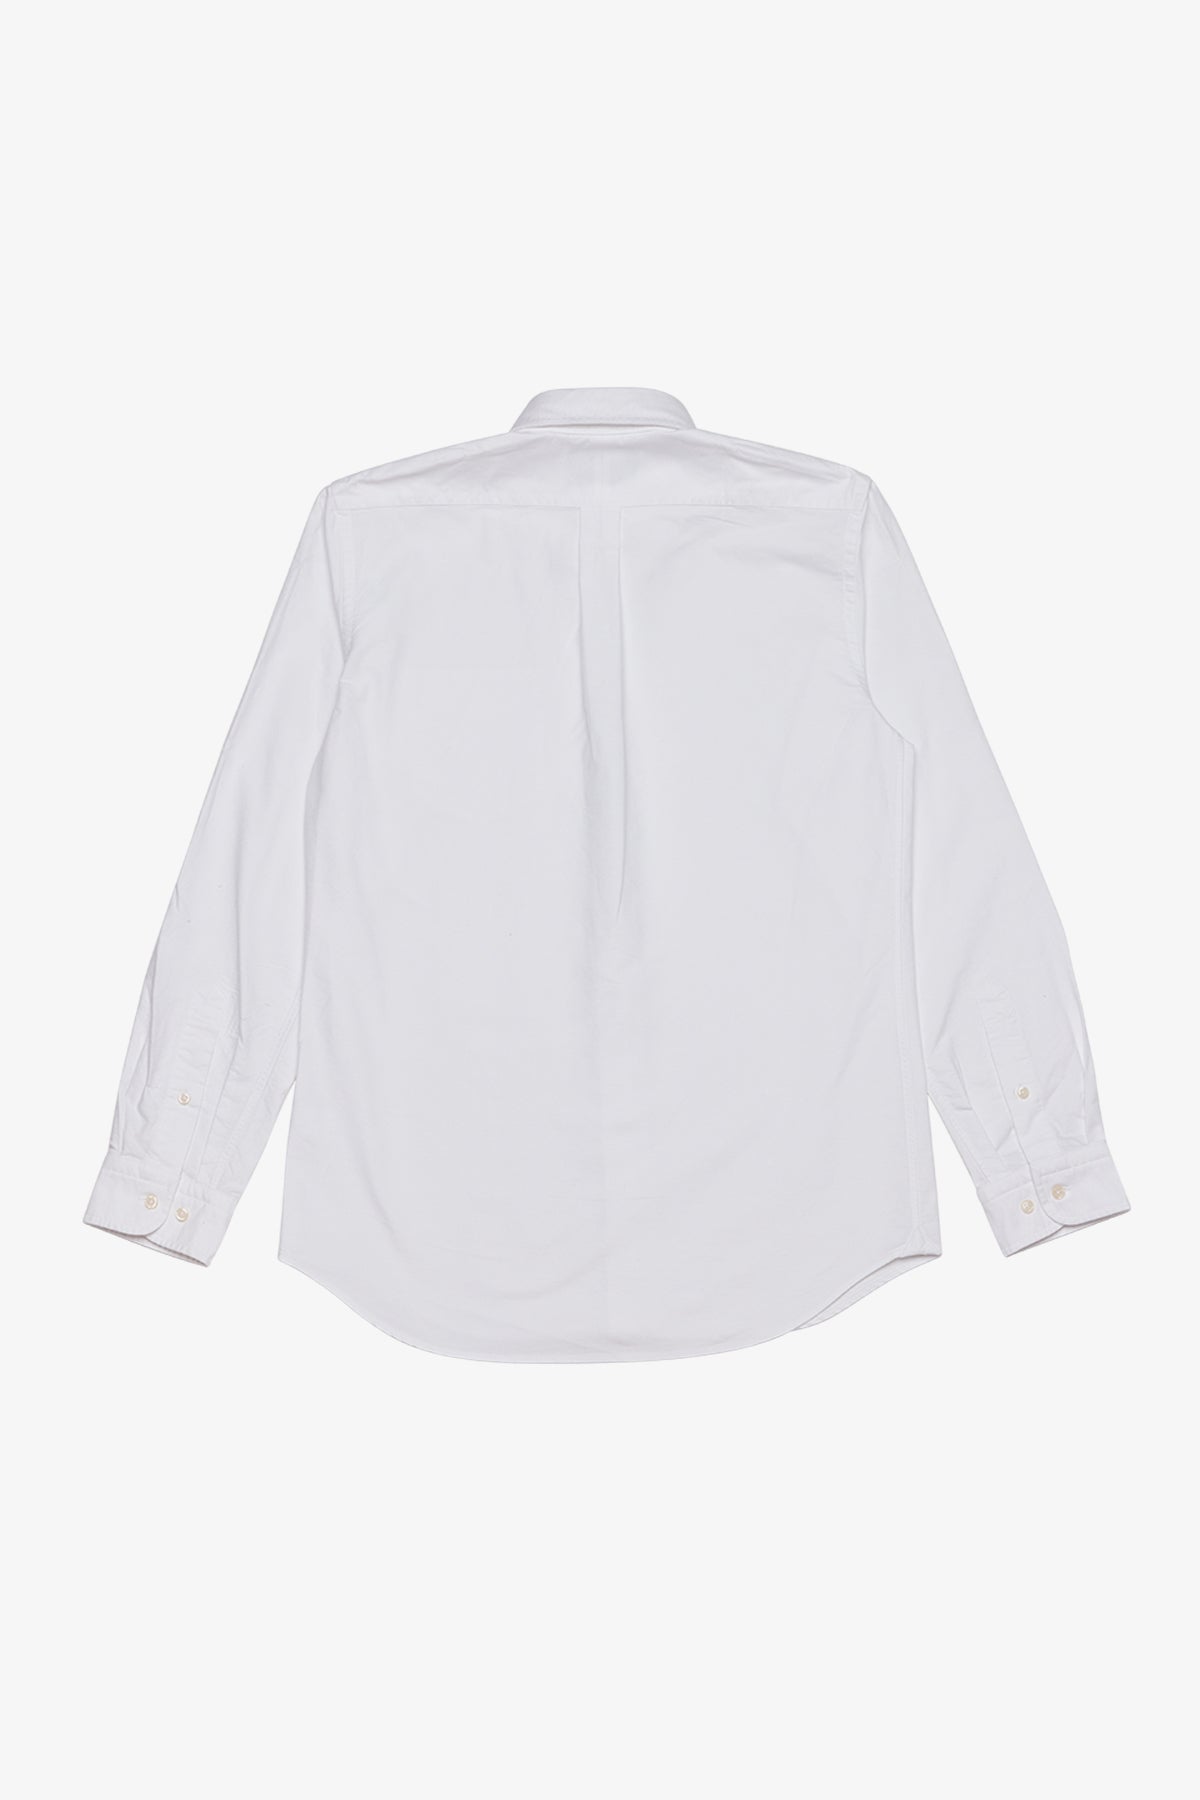 Alden - White Casual Shirt